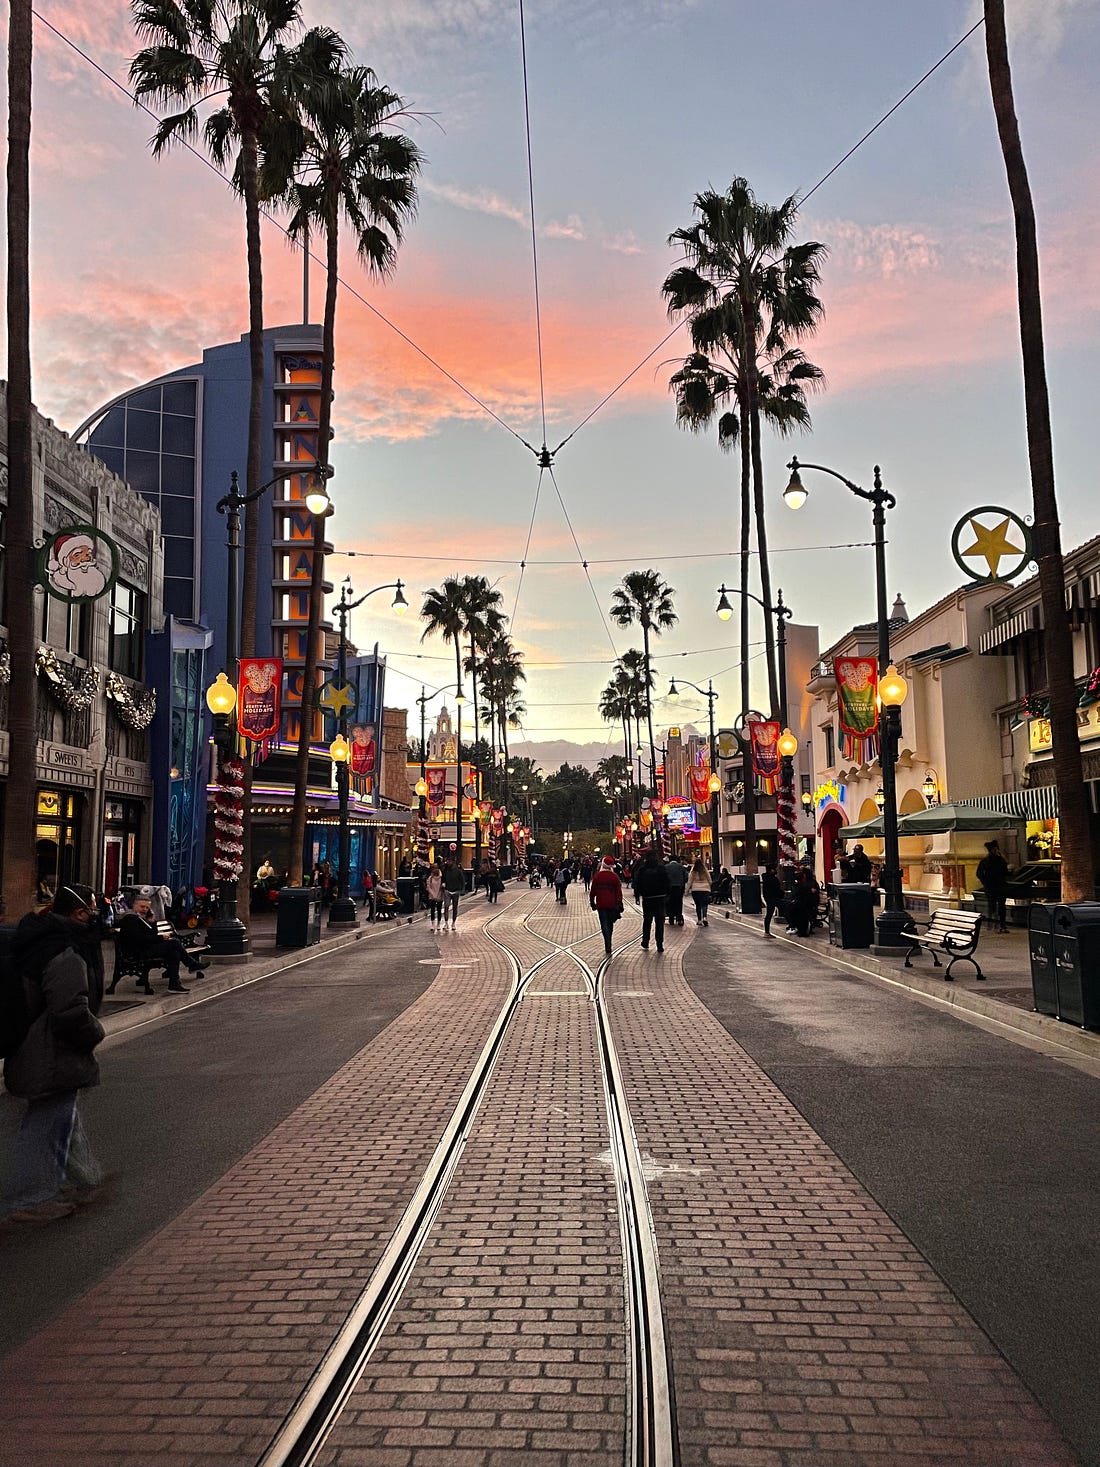 A sunset scene of Hollywood Boulevard in California Adventureland